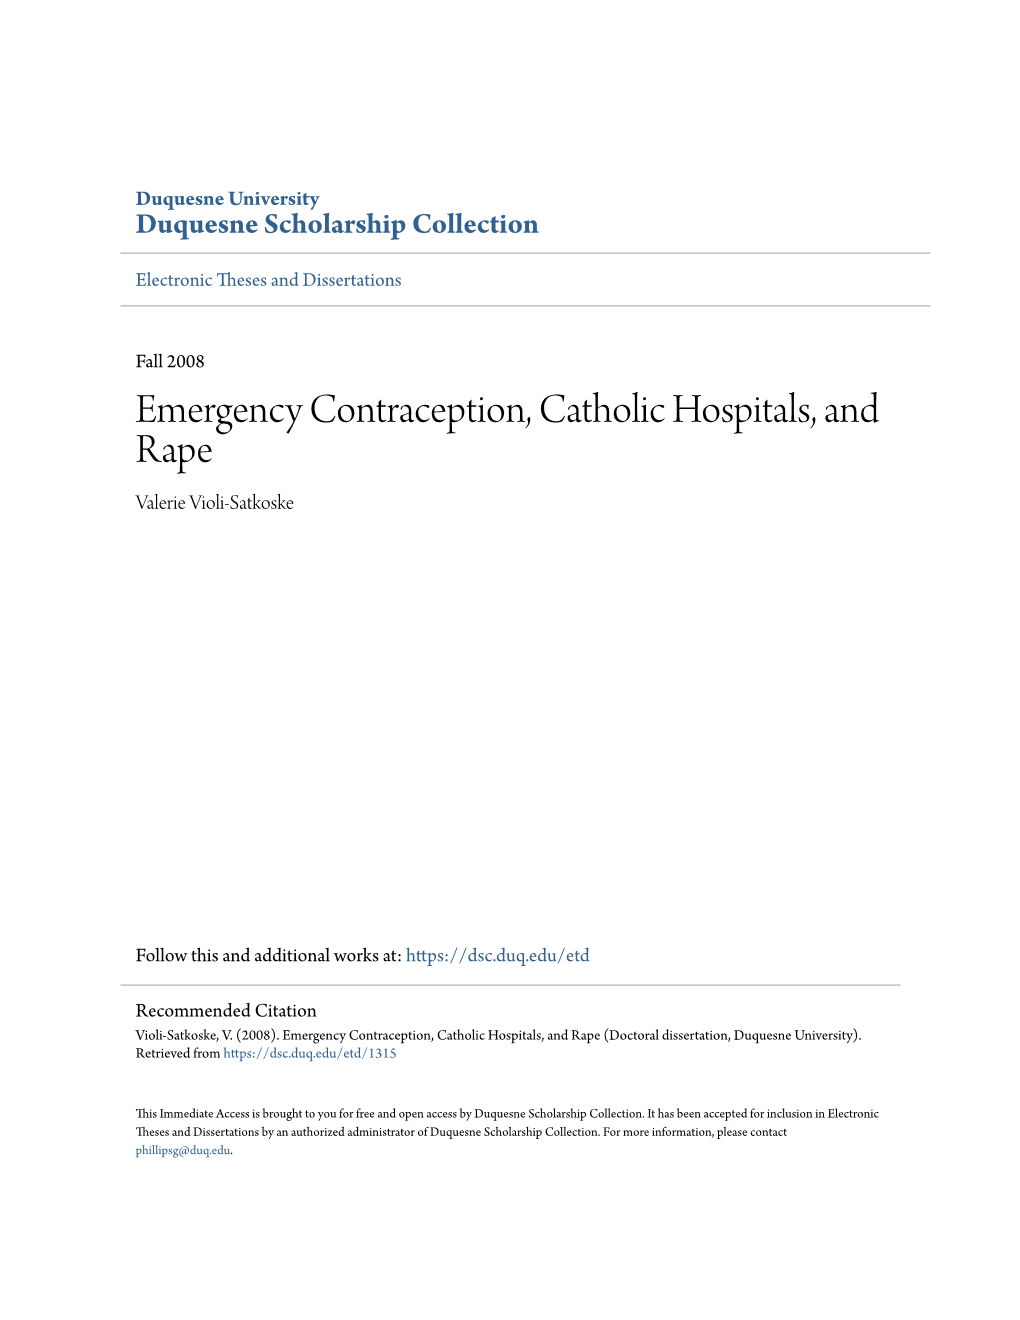 Emergency Contraception, Catholic Hospitals, and Rape Valerie Violi-Satkoske